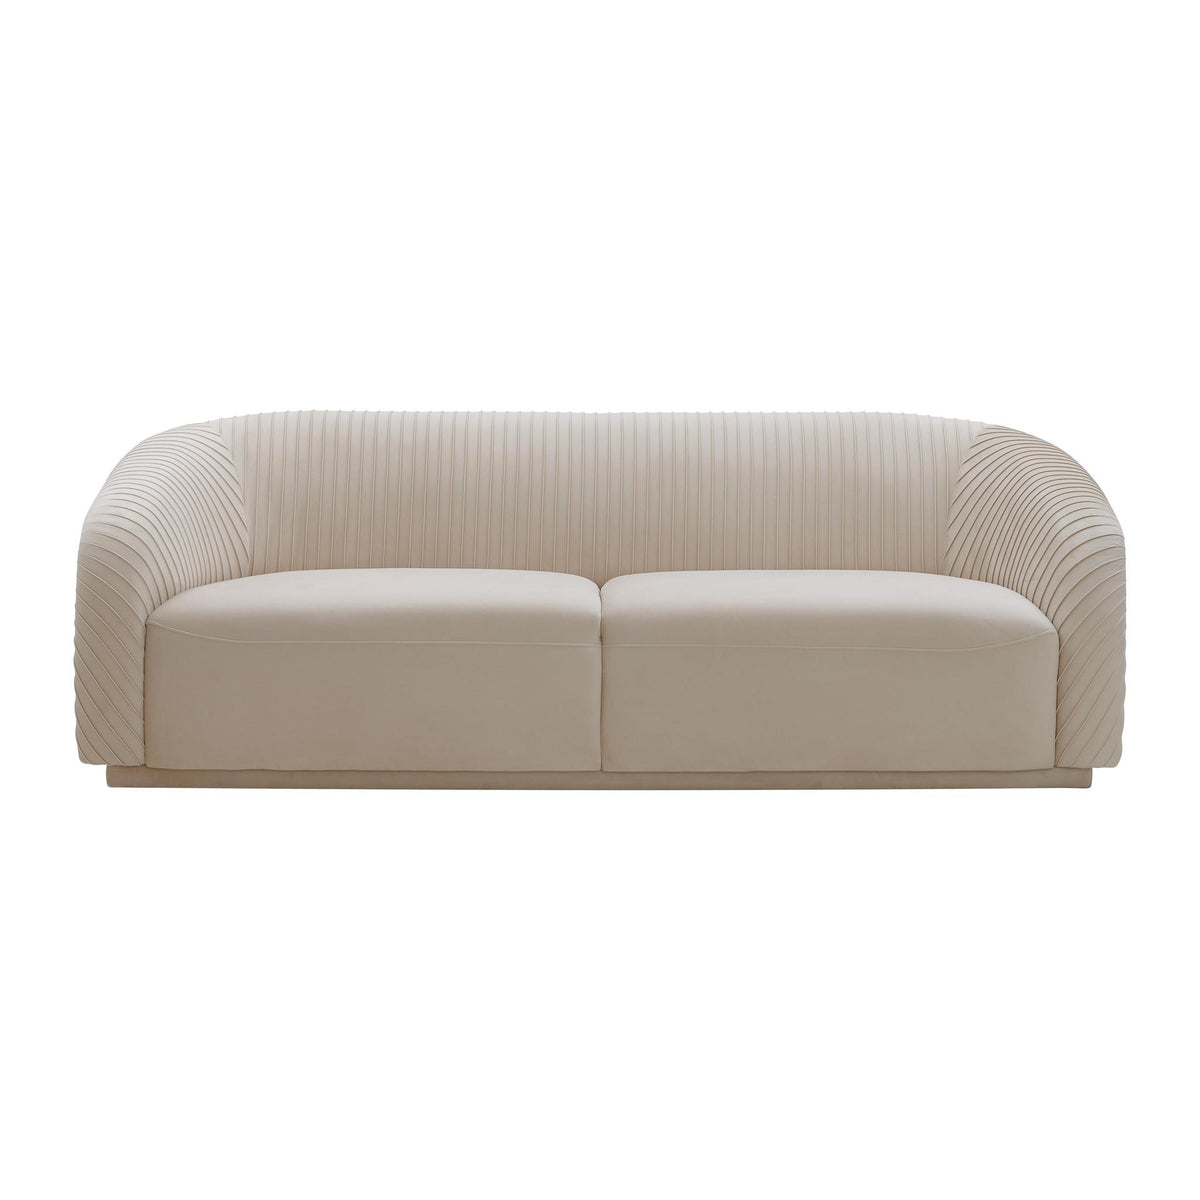 TOV Furniture Modern Yara Pleated Beige Velvet Sofa - TOV-S6457